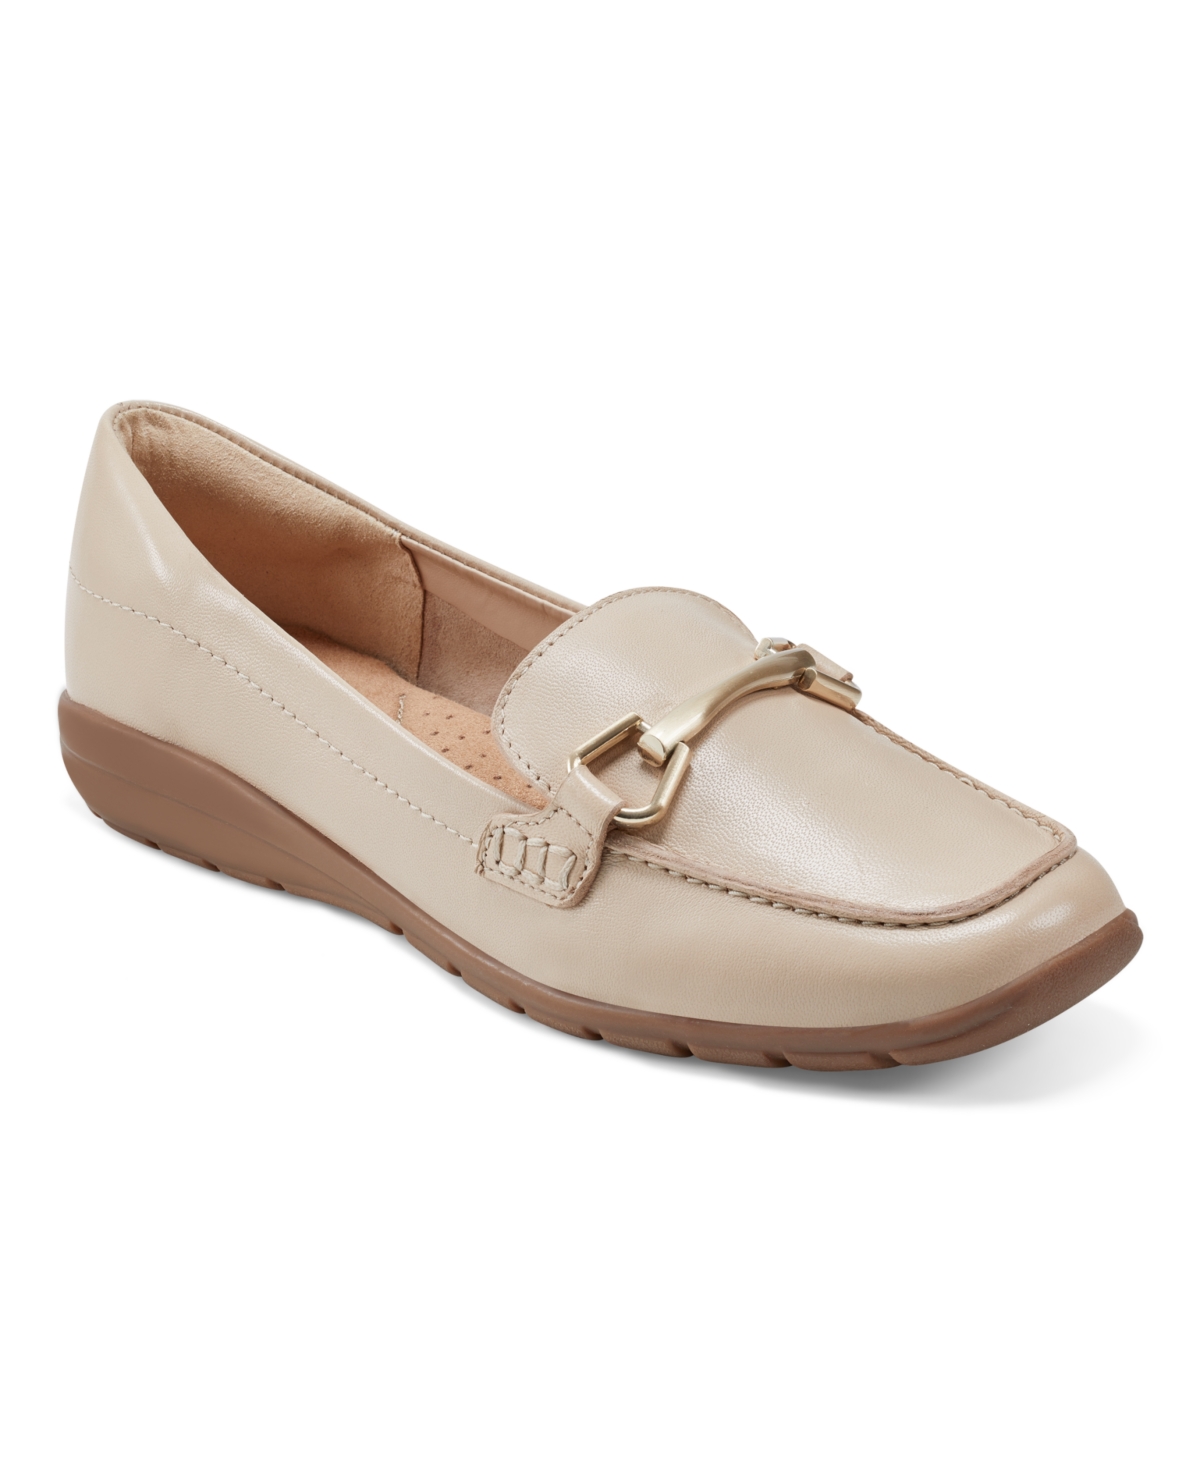 Women's Eflex Amalie Square Toe Casual Slip-On Flat Loafers - Medium Natural Leather